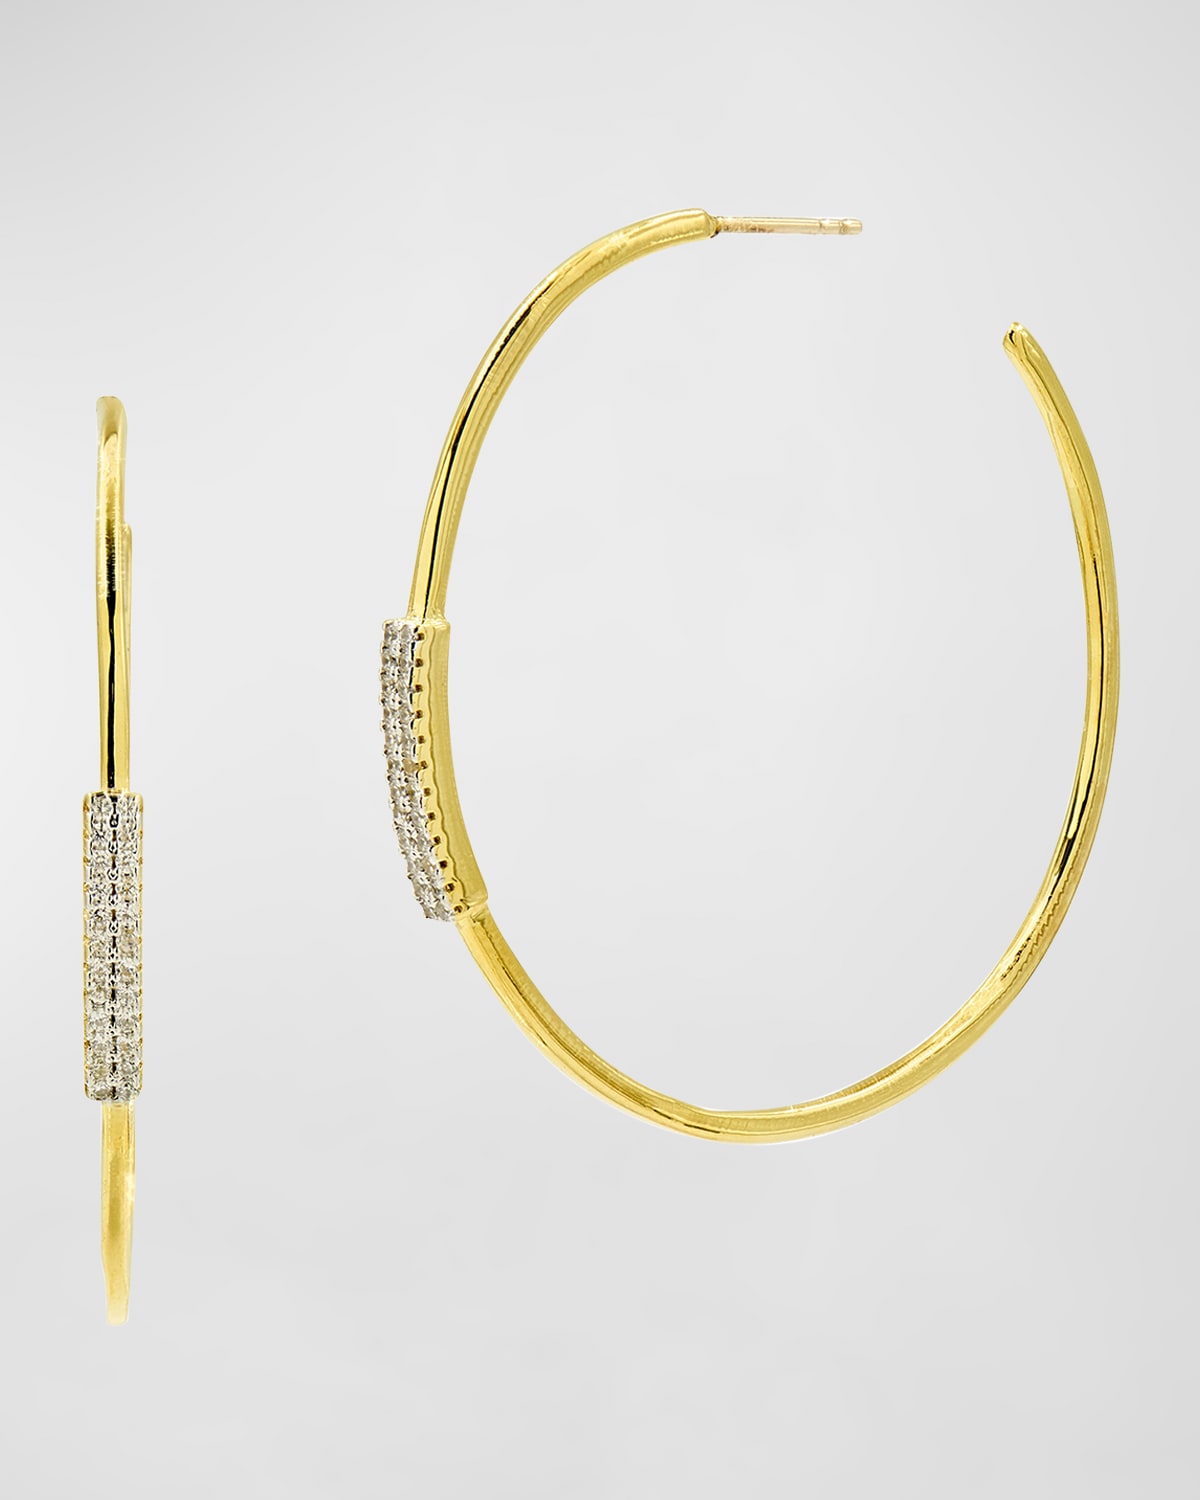 Freida Rothman Radiance Delicate Hoop Earrings In Gold And Silver